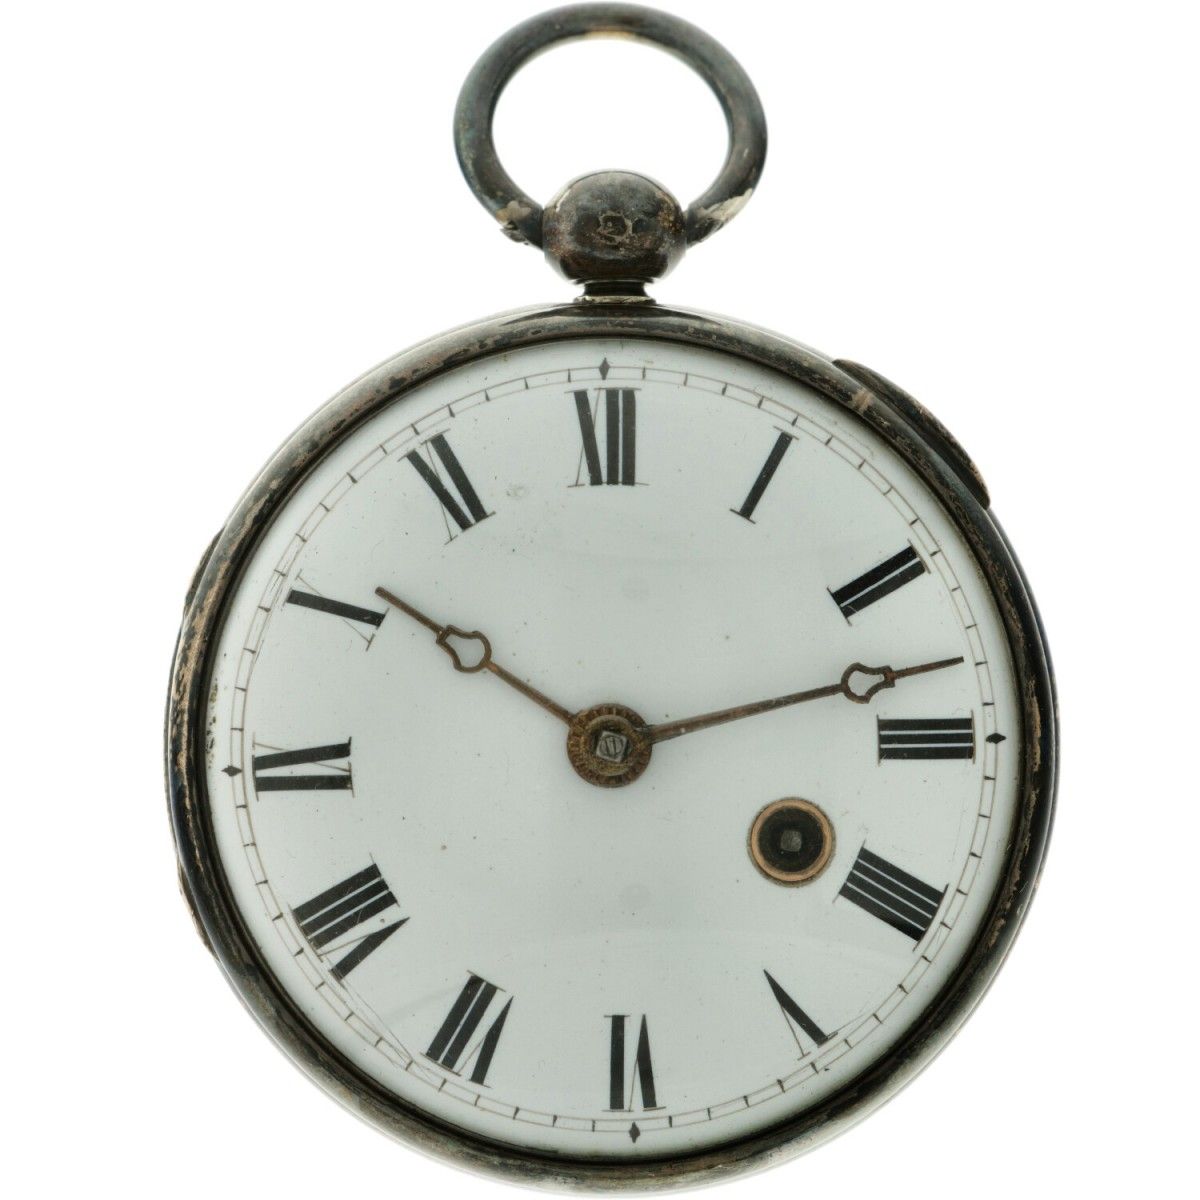 H.J. Byaro, Kentish Town Snek Spillegang - Men's pocketwatch - apprx. 1750. Case&hellip;